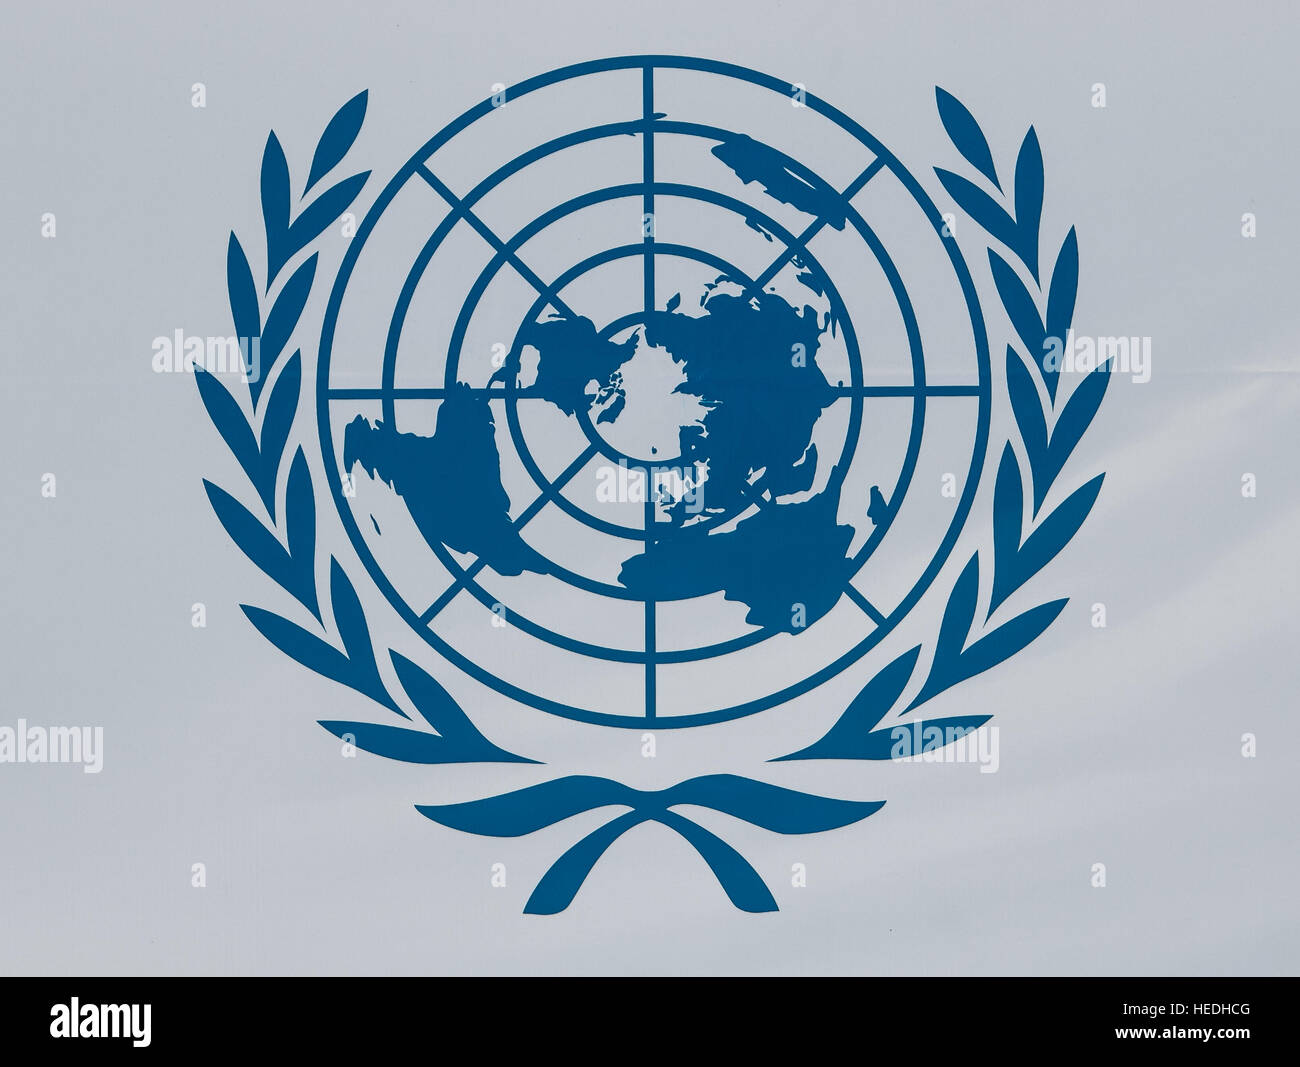 A blue UN logo on a white background. Stock Photo